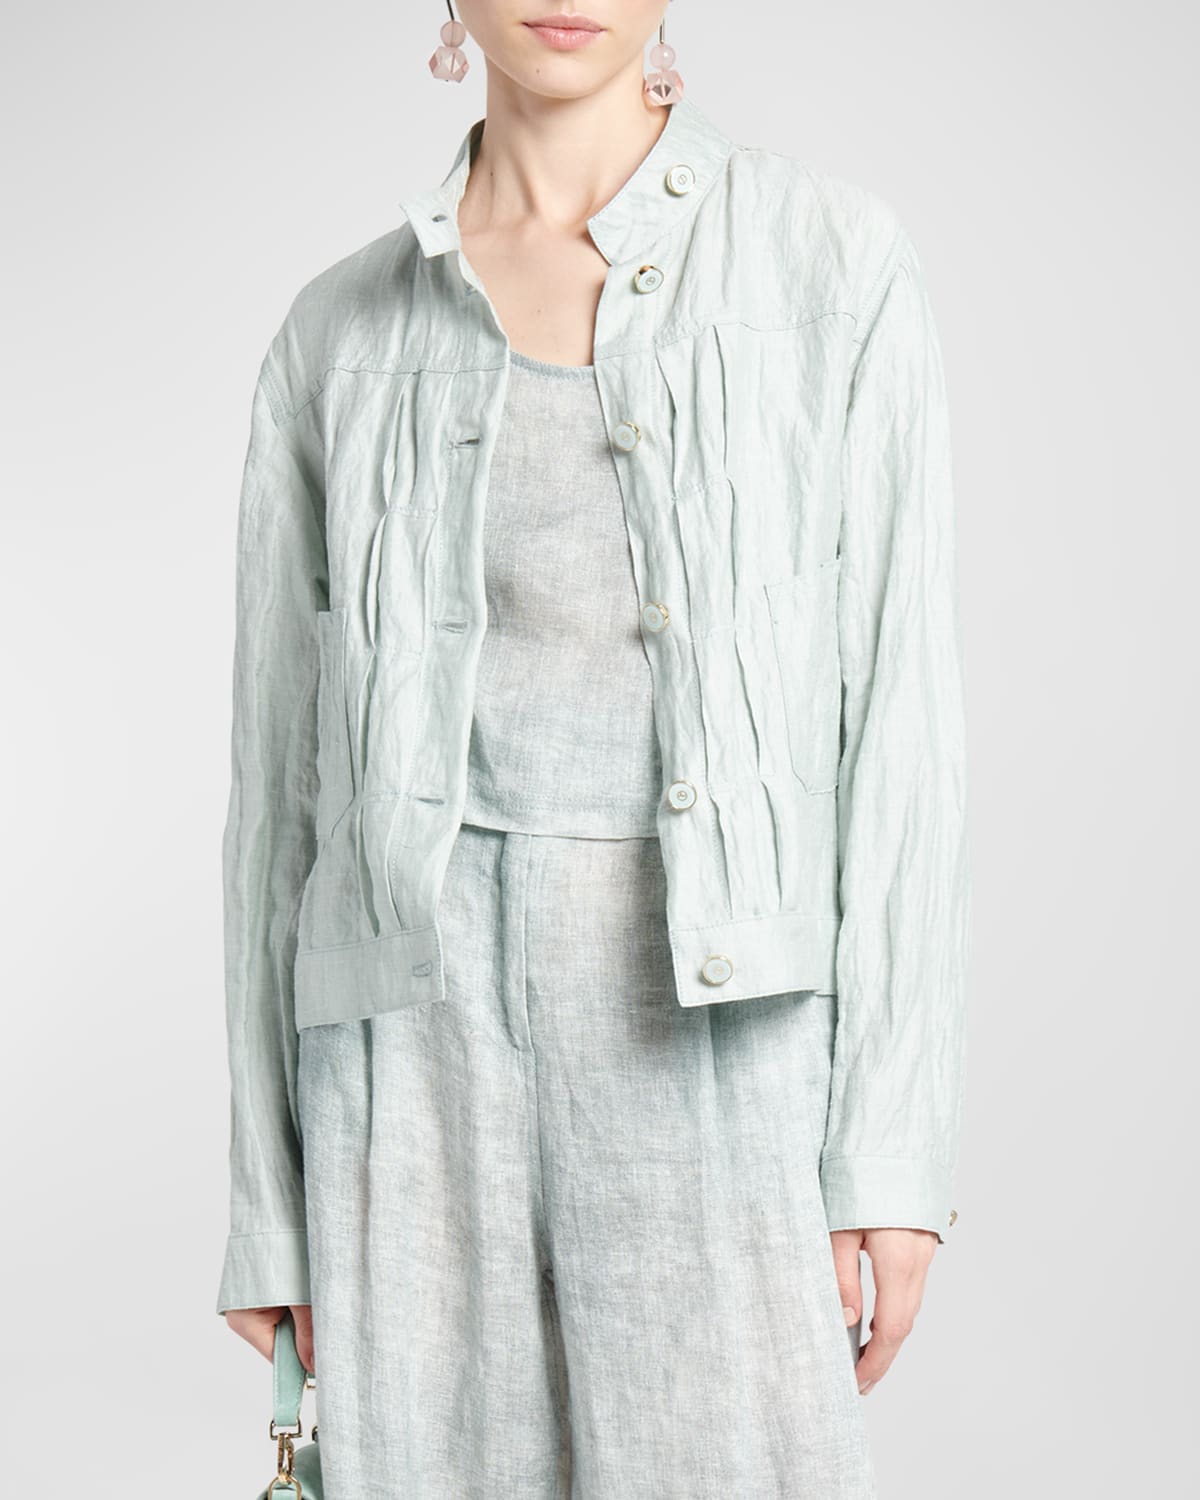 Giorgio Armani Women's Textured Cotton & Linen Jacket In Mint